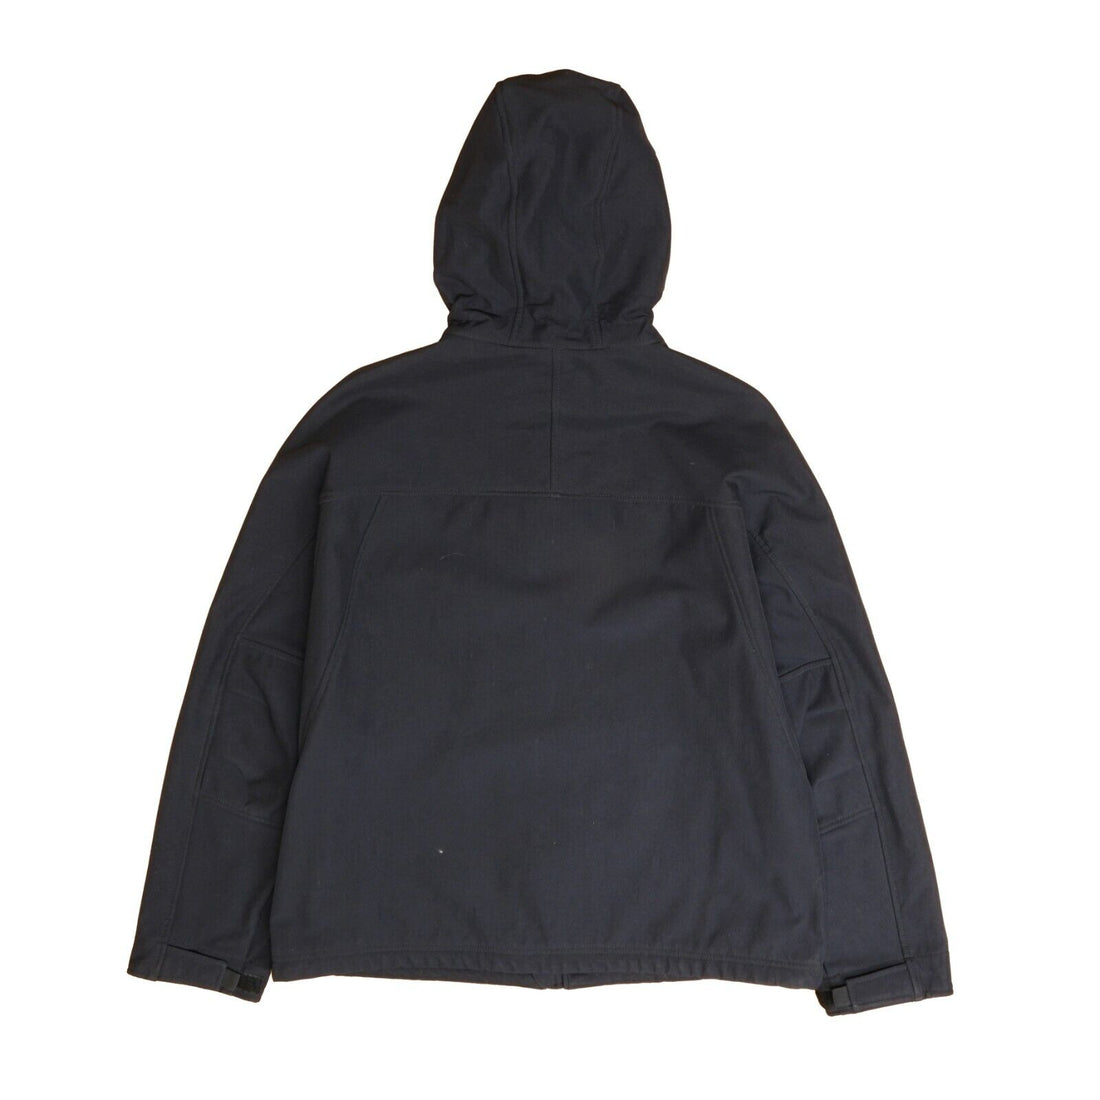 Carhartt Light Shell Jacket Size Large Black J182